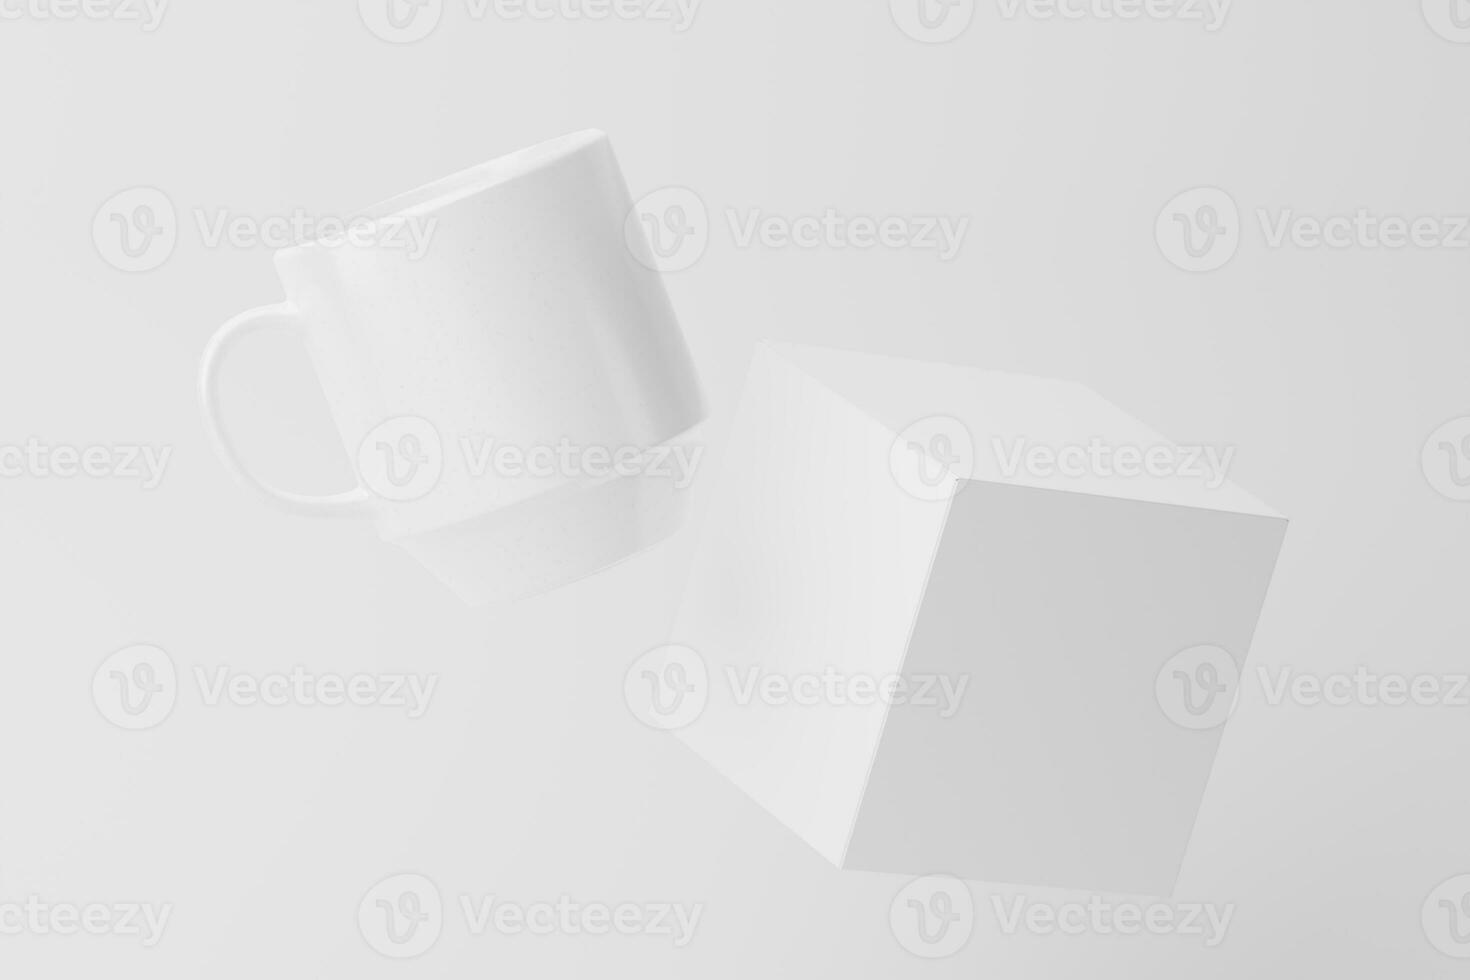 Ceramic Mug Cup For Coffee Tea White Blank 3D rendering Mockup photo